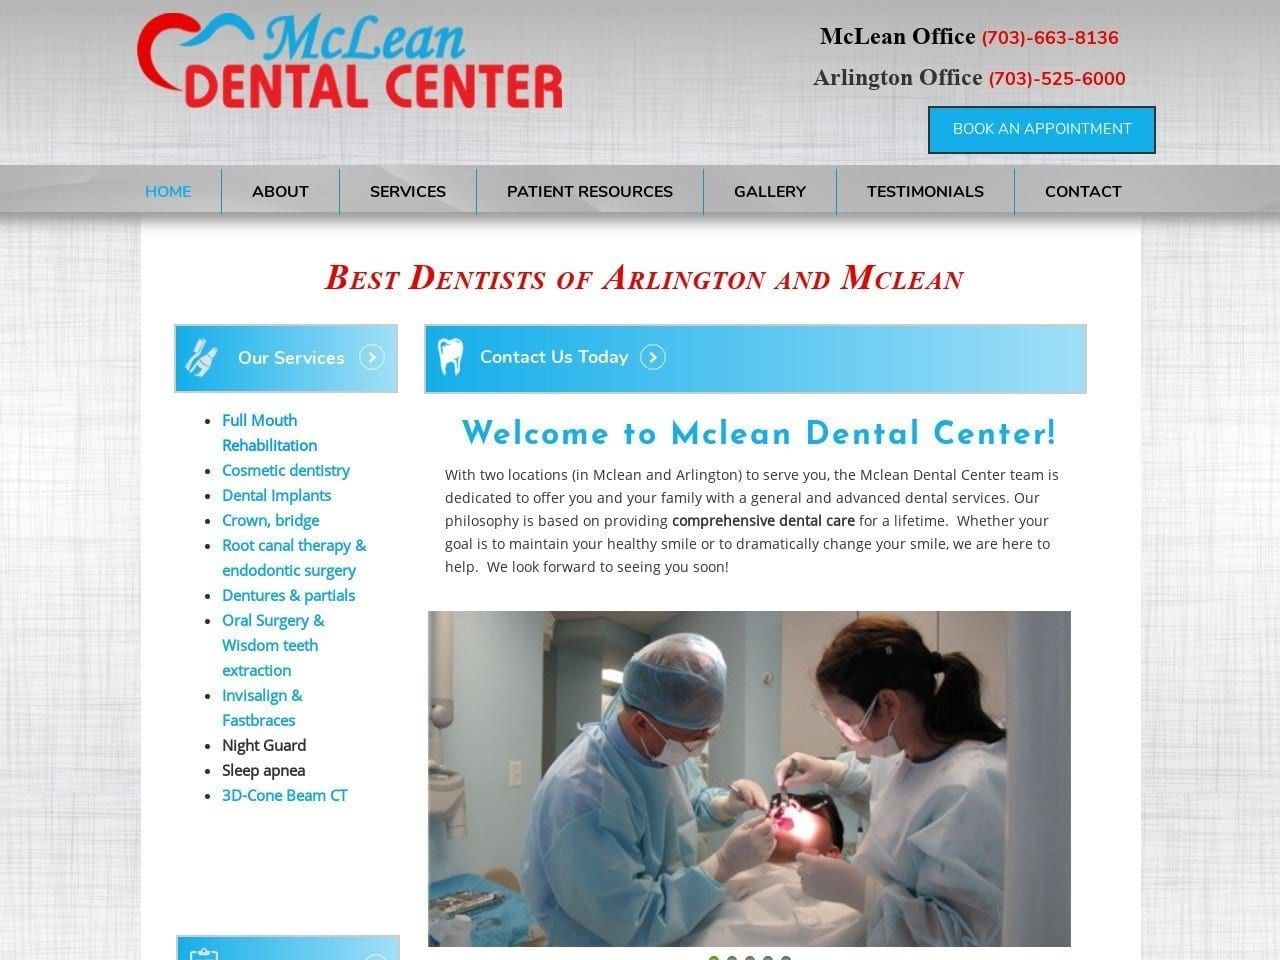 McLean Dental Center Website Screenshot from mcleandentalcenter.com